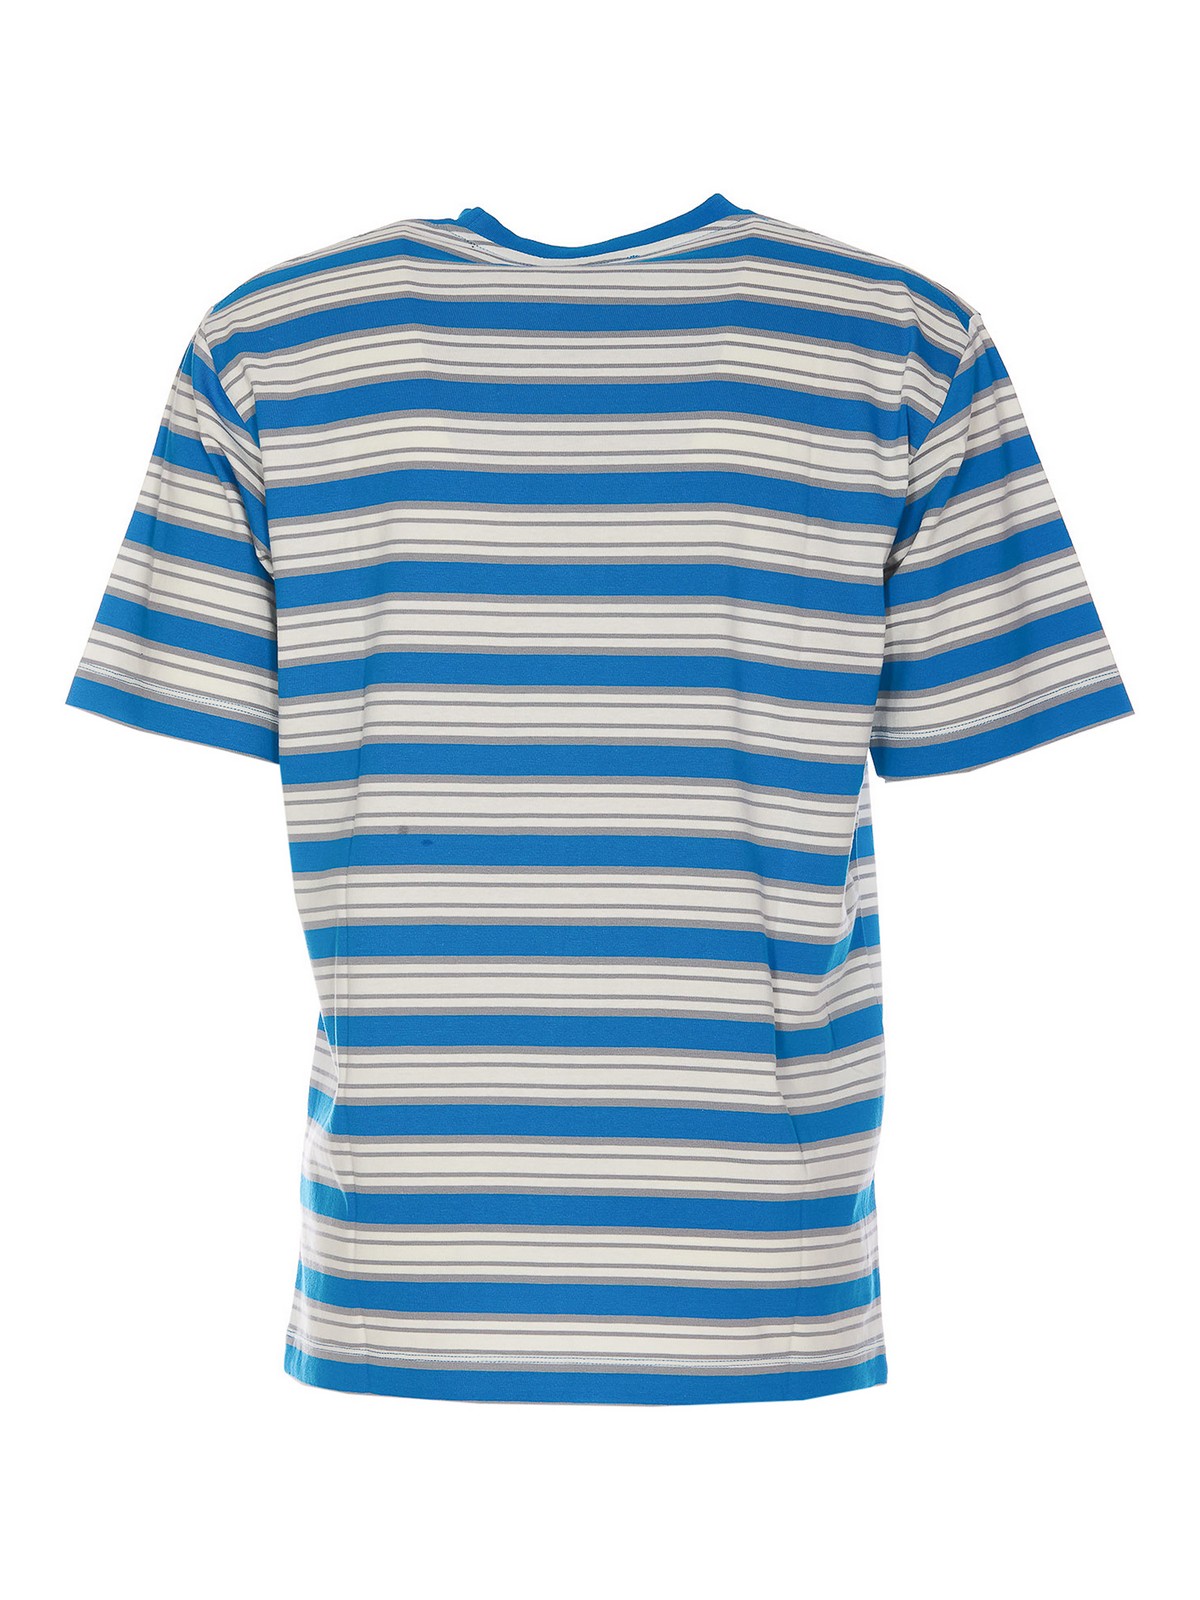 Shop Etudes Studio Camiseta - Azul In Blue